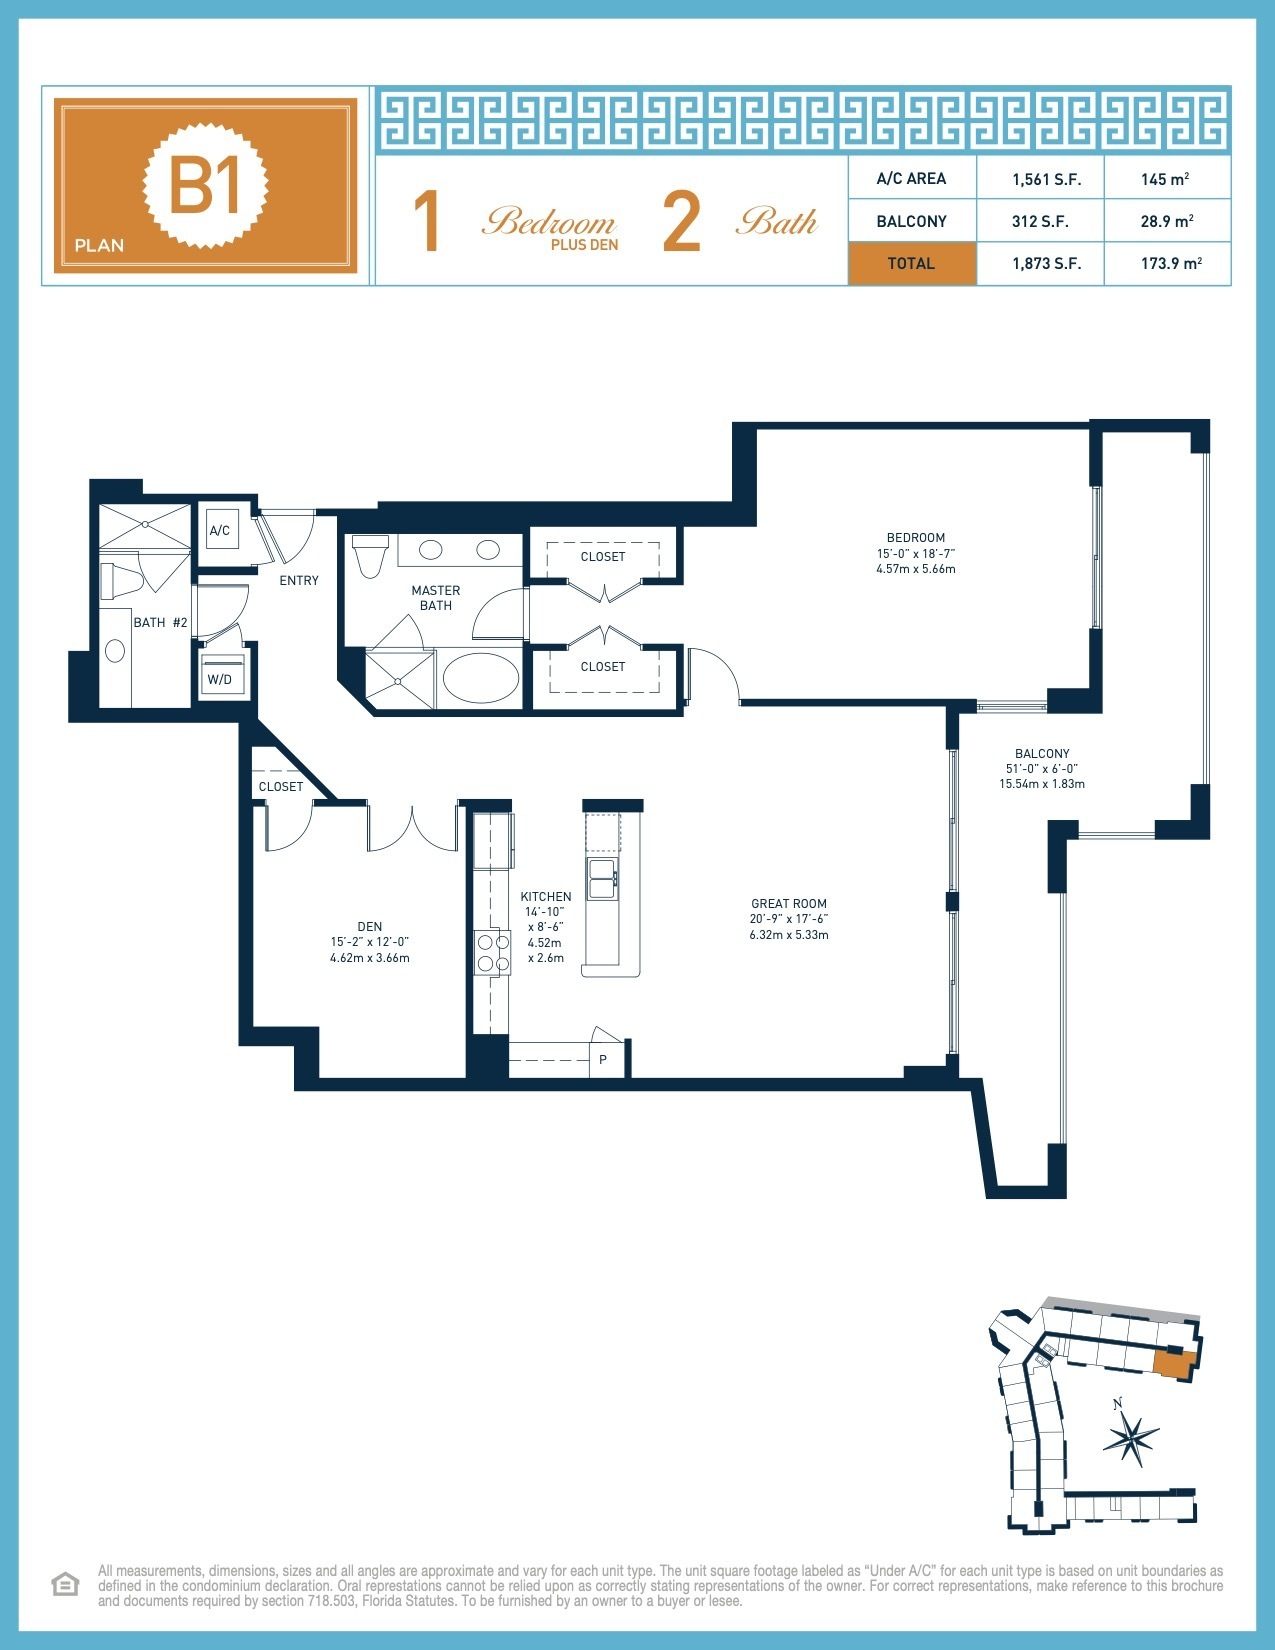 Floor Plan for South Tower Floorplans, B1